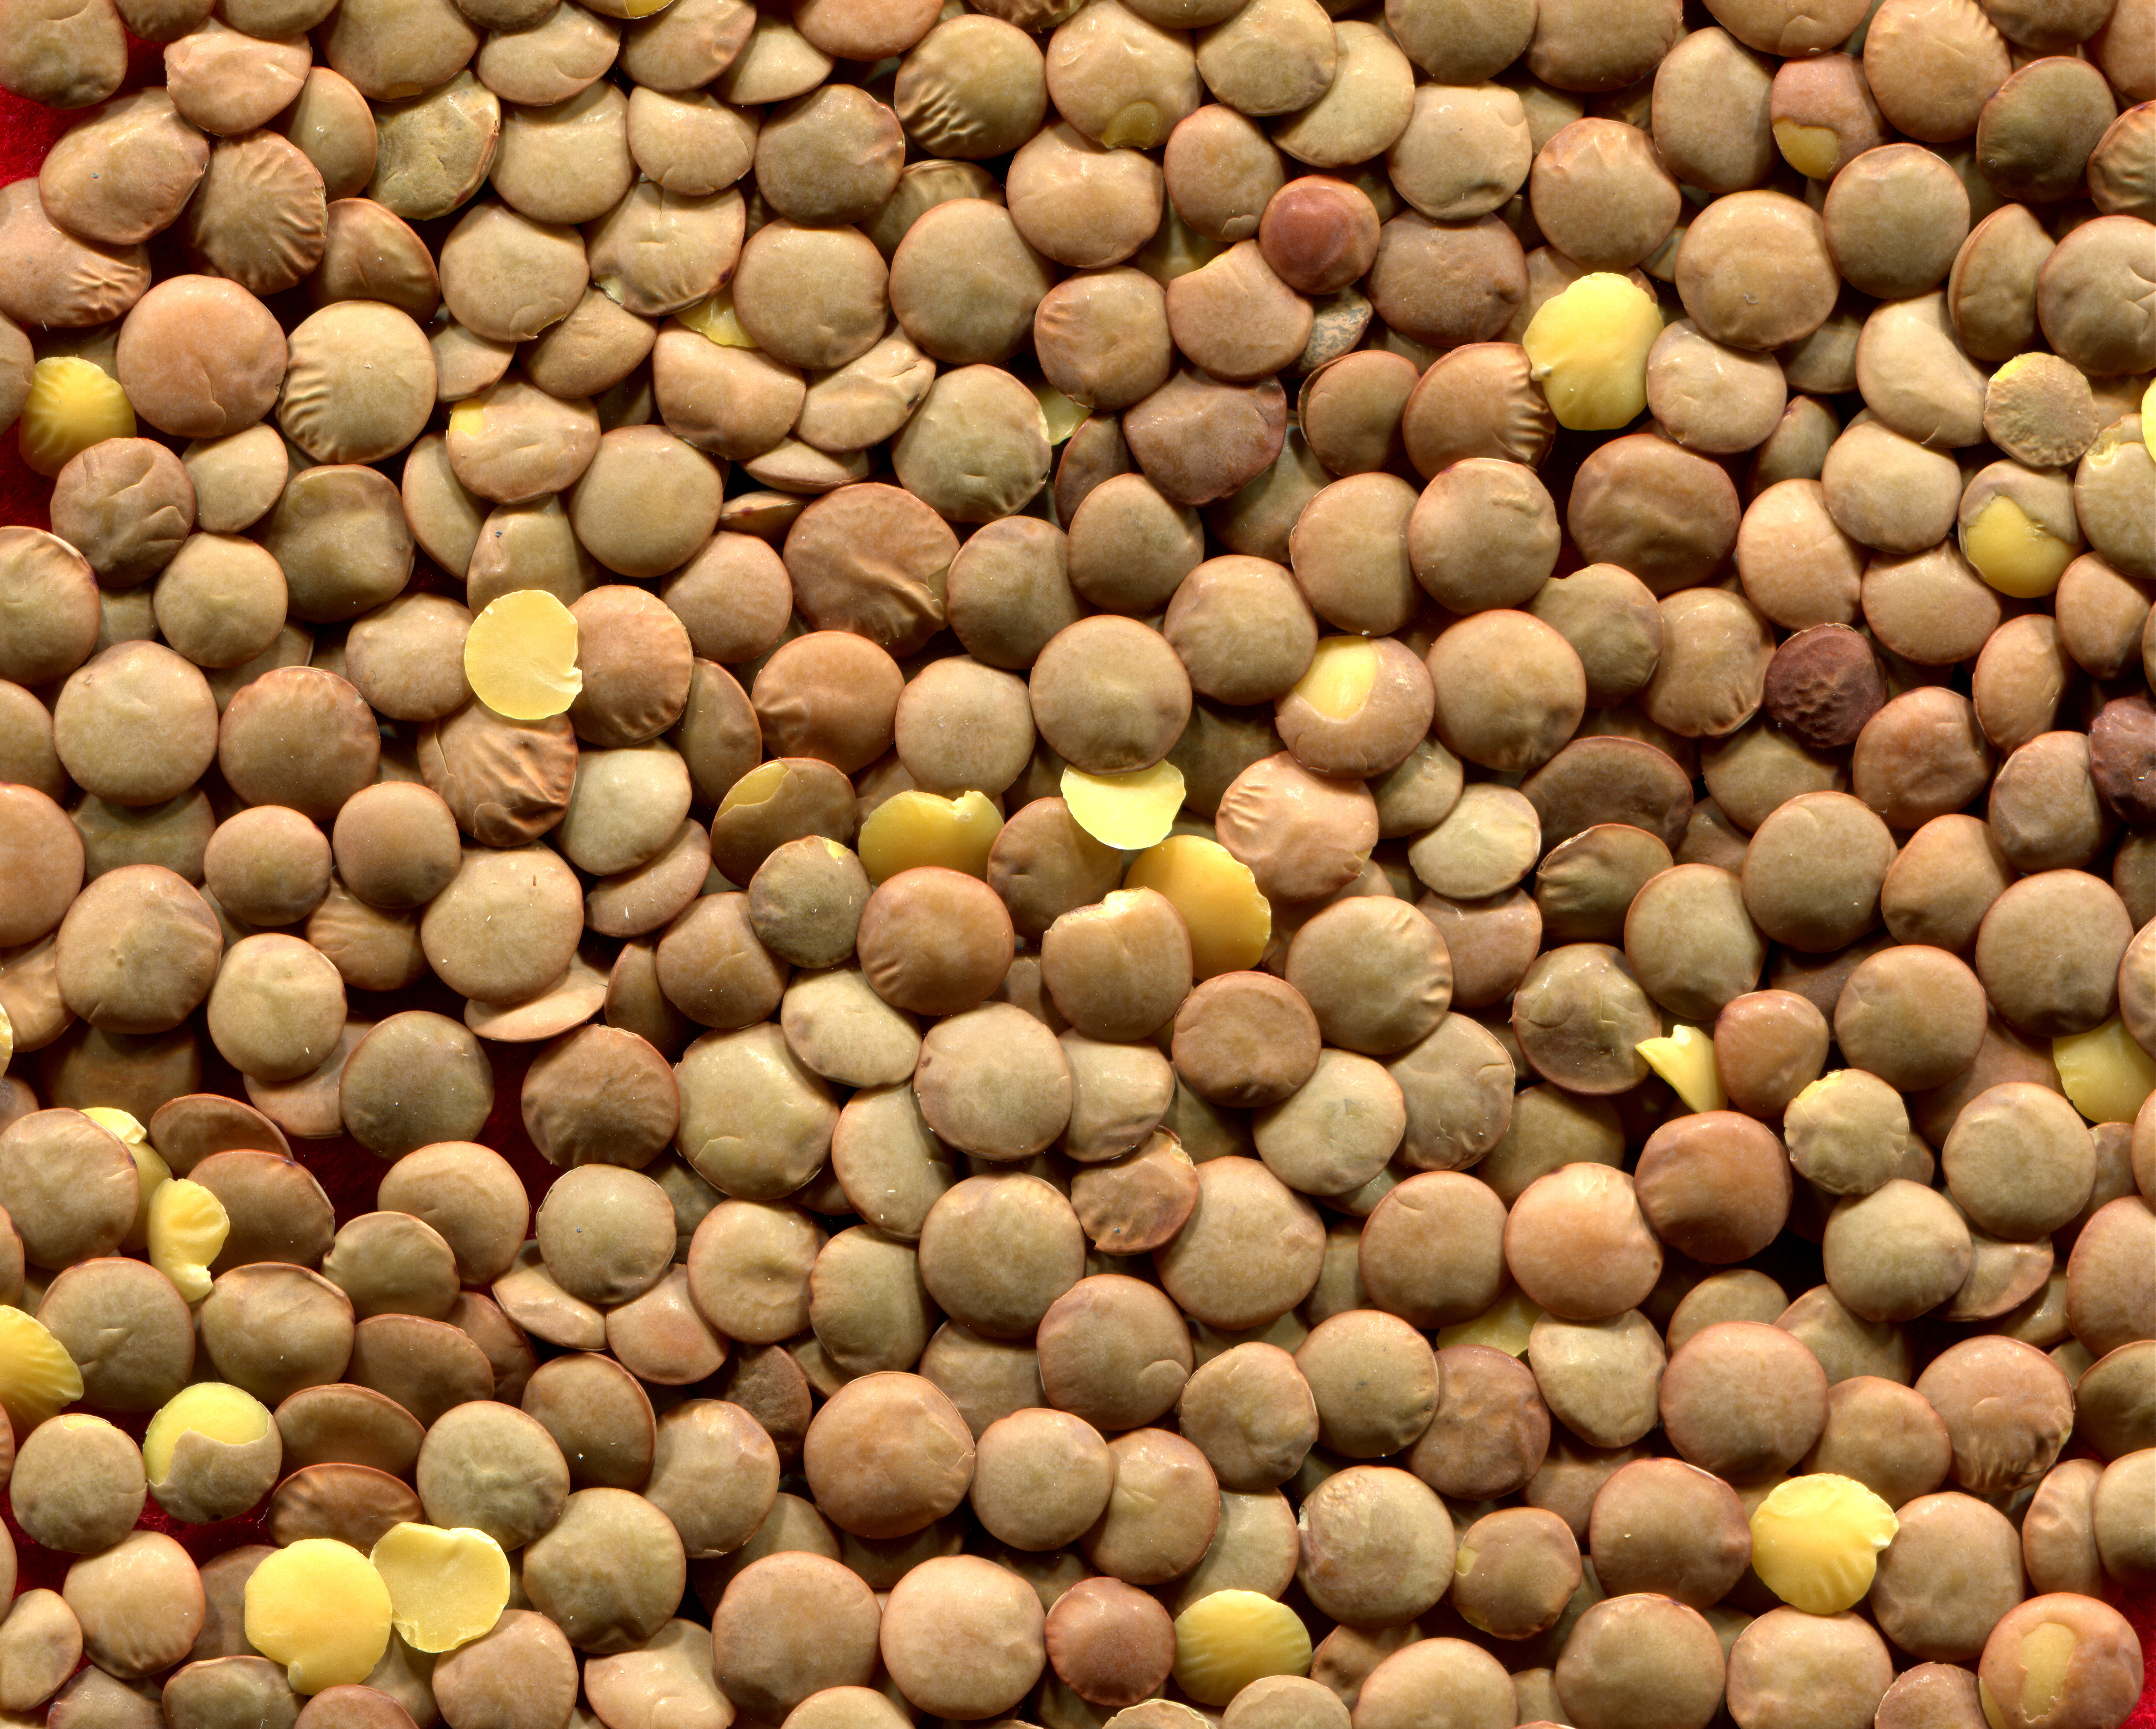 grey brown round peas